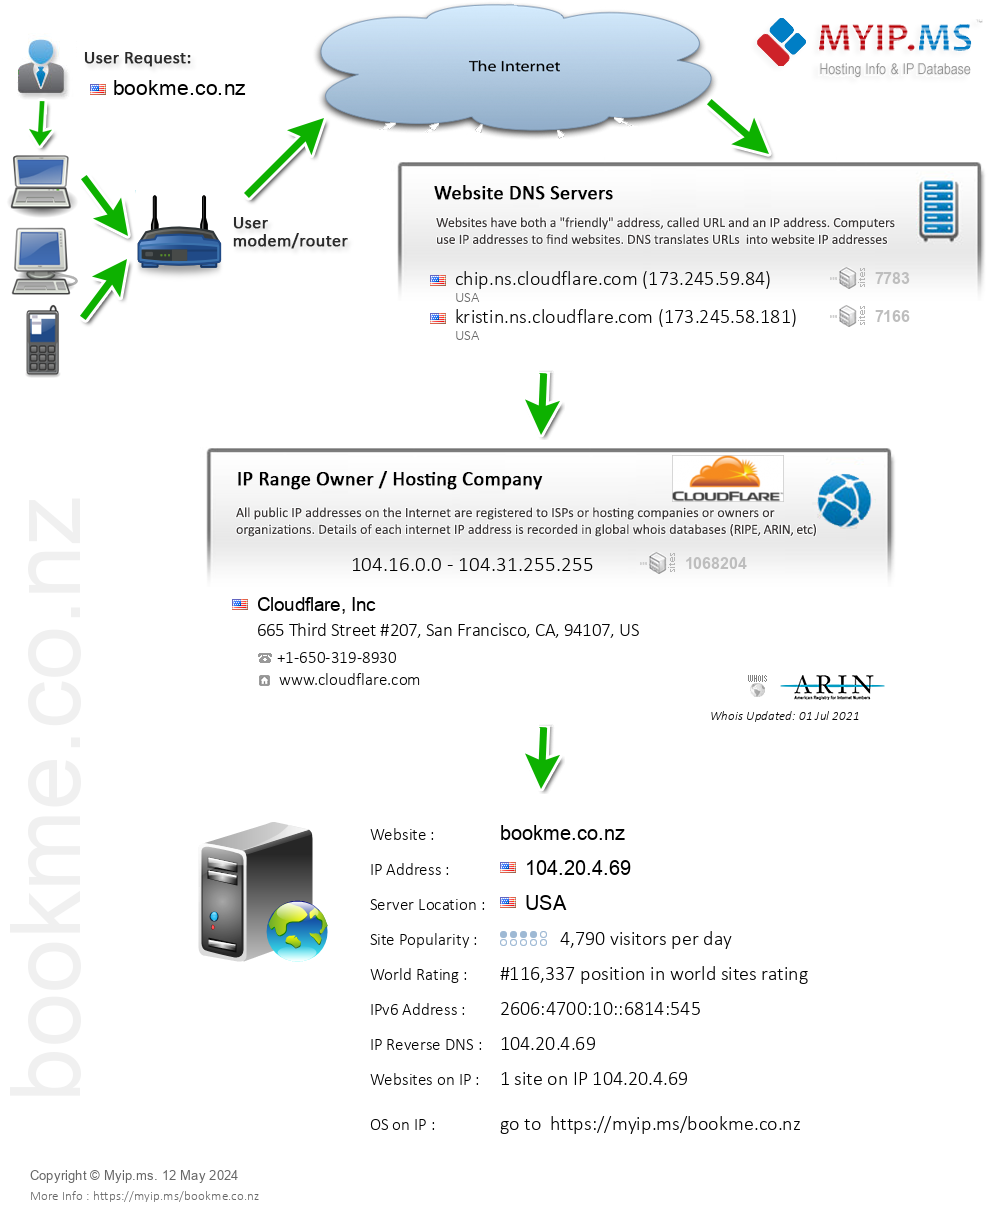 Bookme.co.nz - Website Hosting Visual IP Diagram